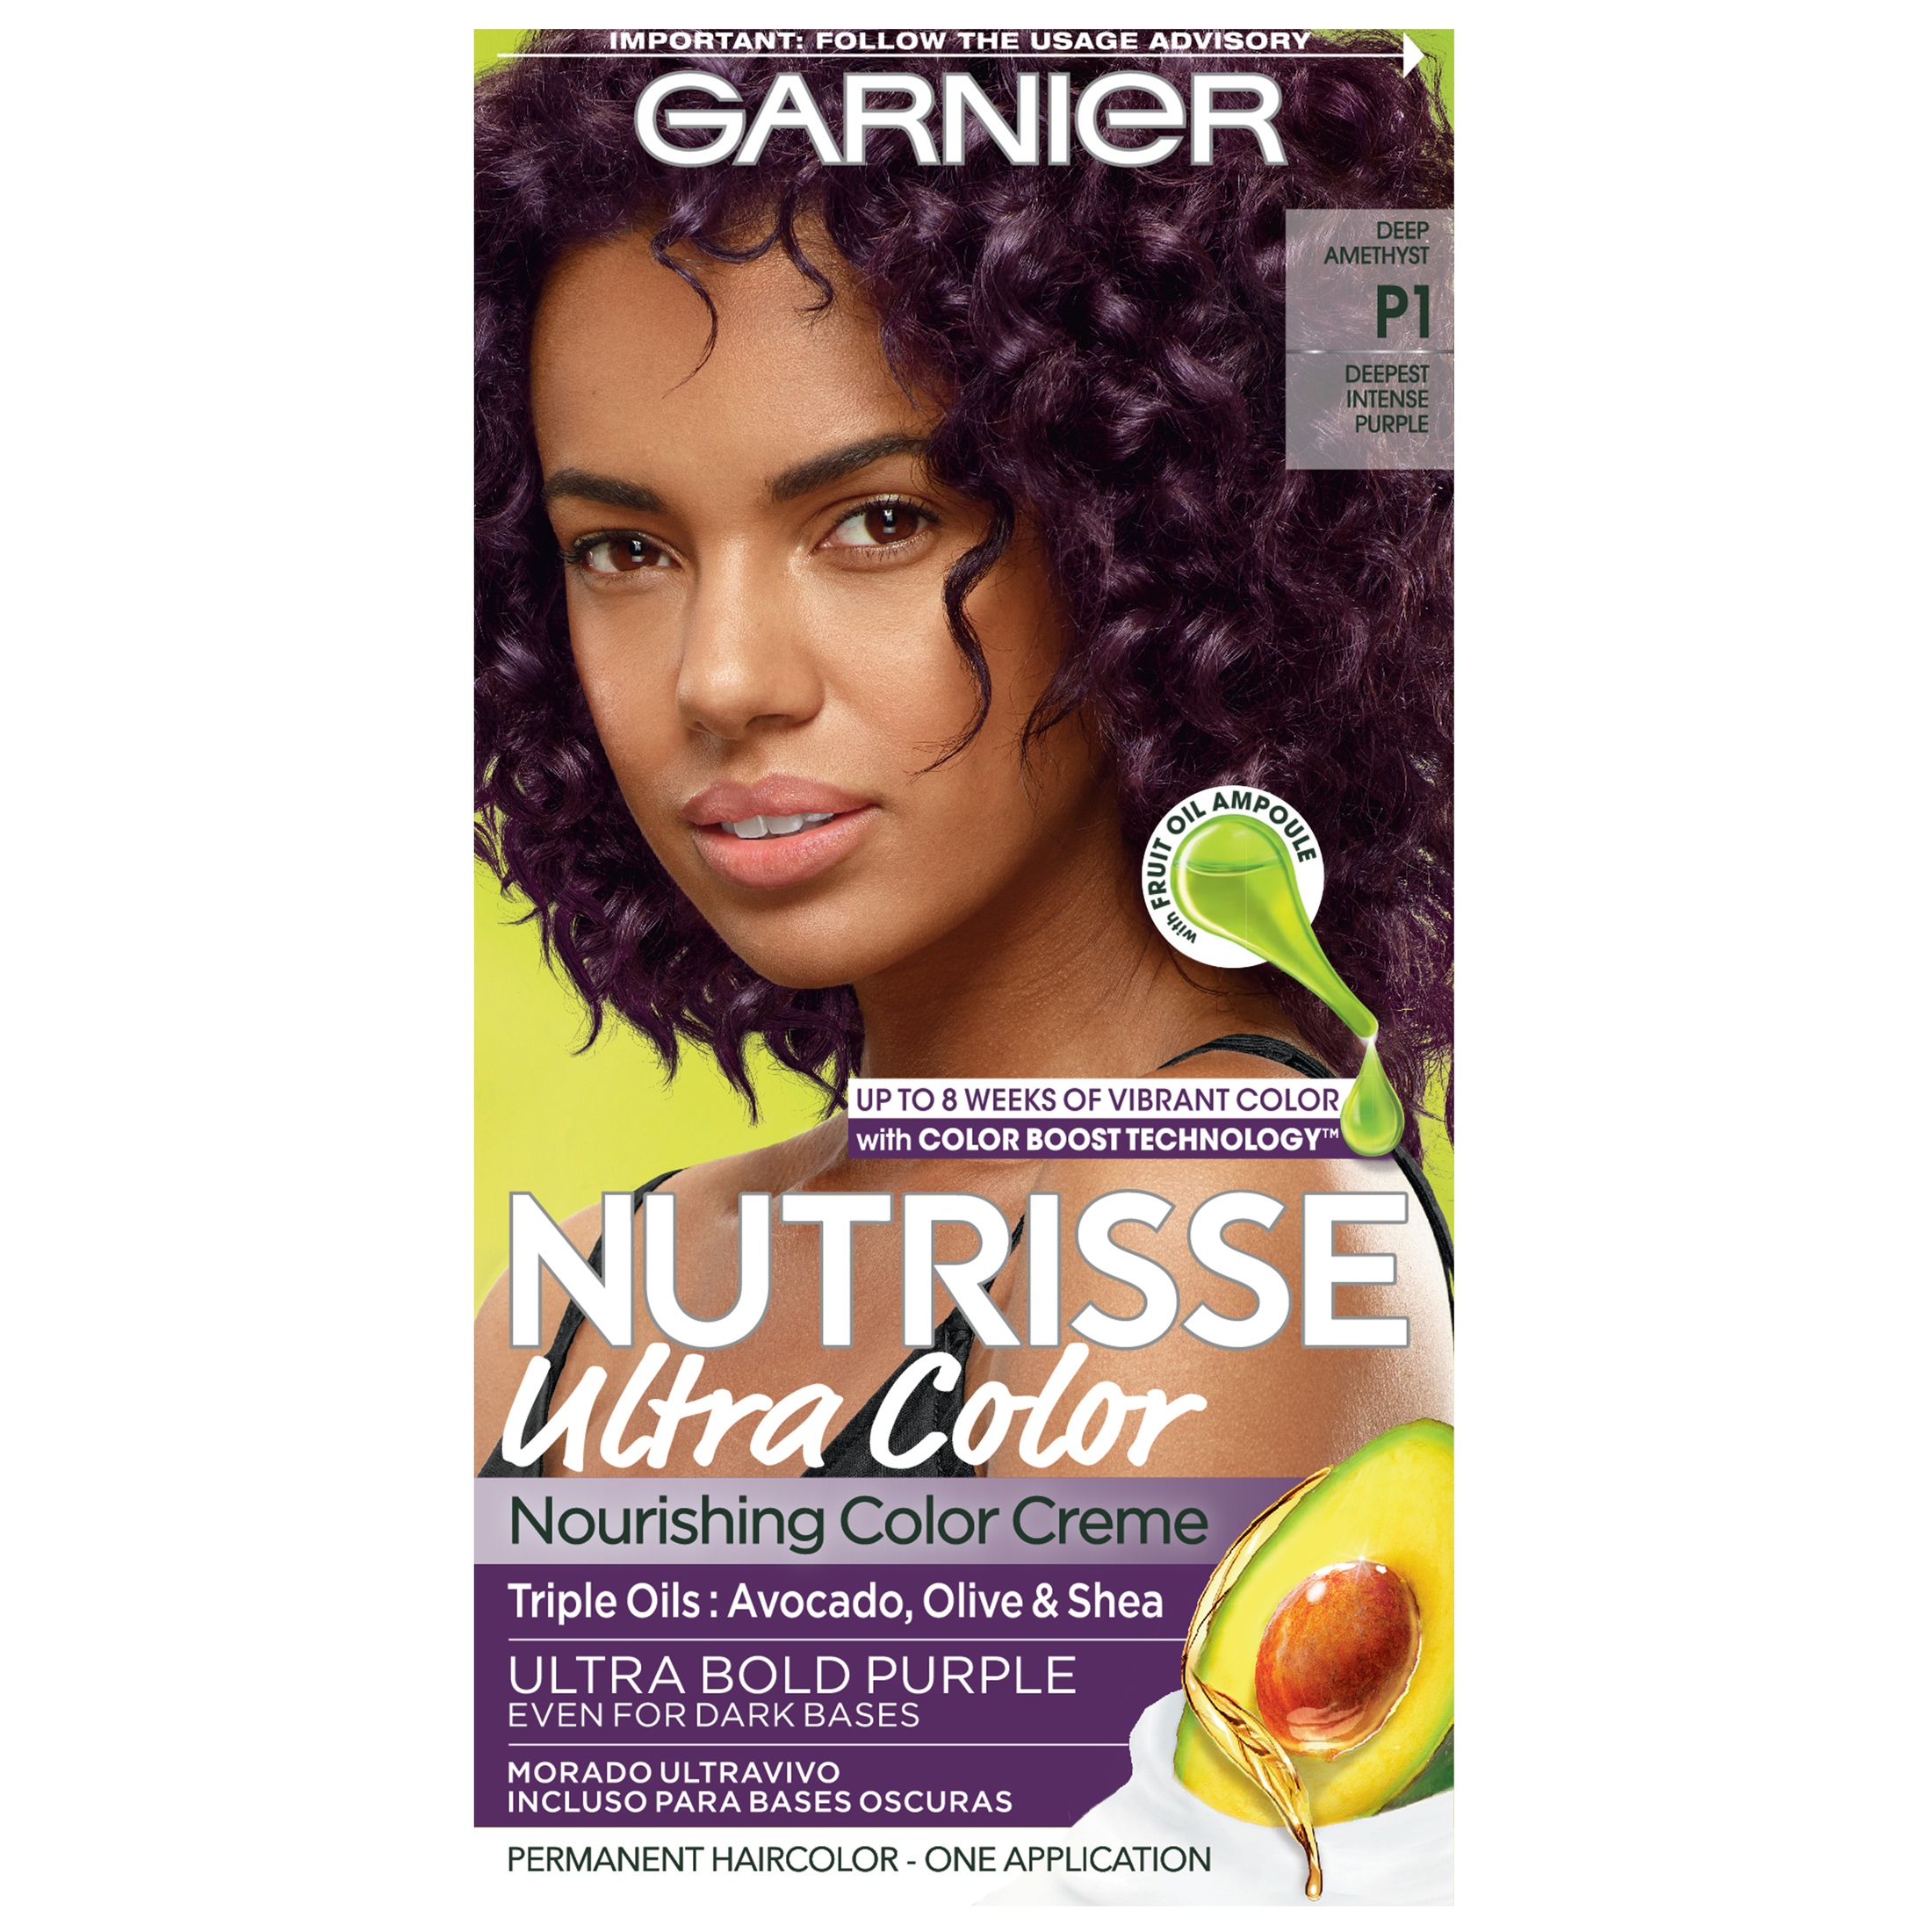 Garnier Nutrisse Nourishing Hair Color Creme, P1 Deepest Intense Purple - image 1 of 6